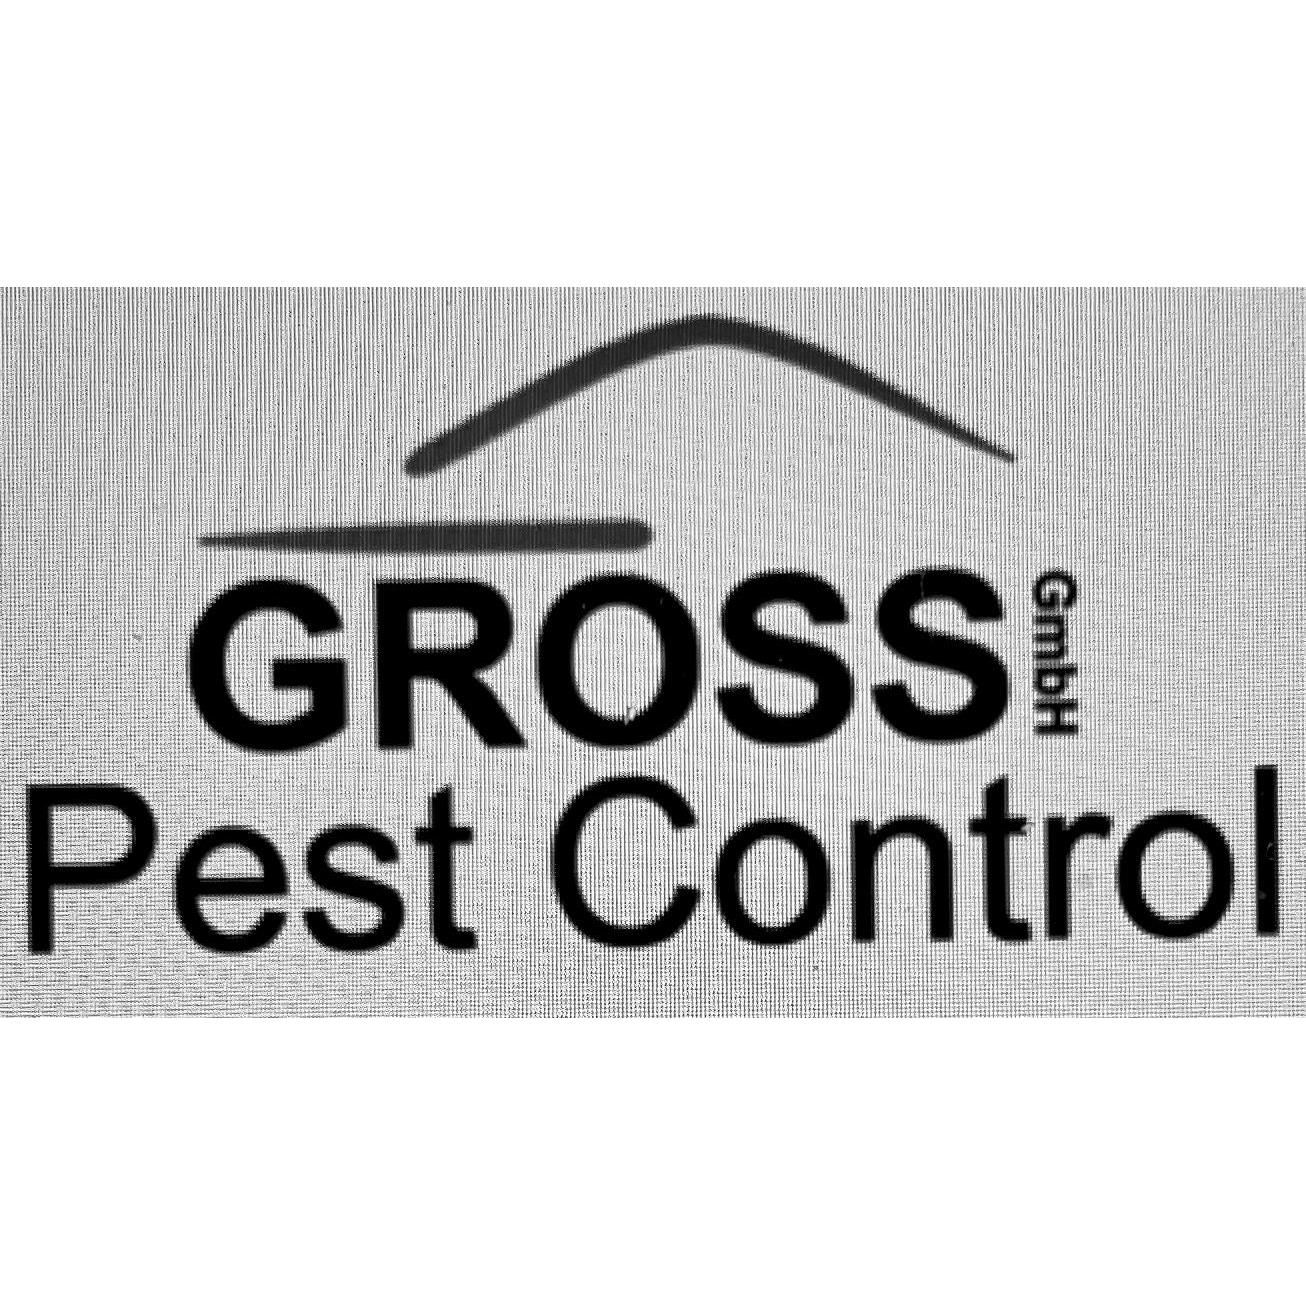 GROSS Pest Control GmbH Logo